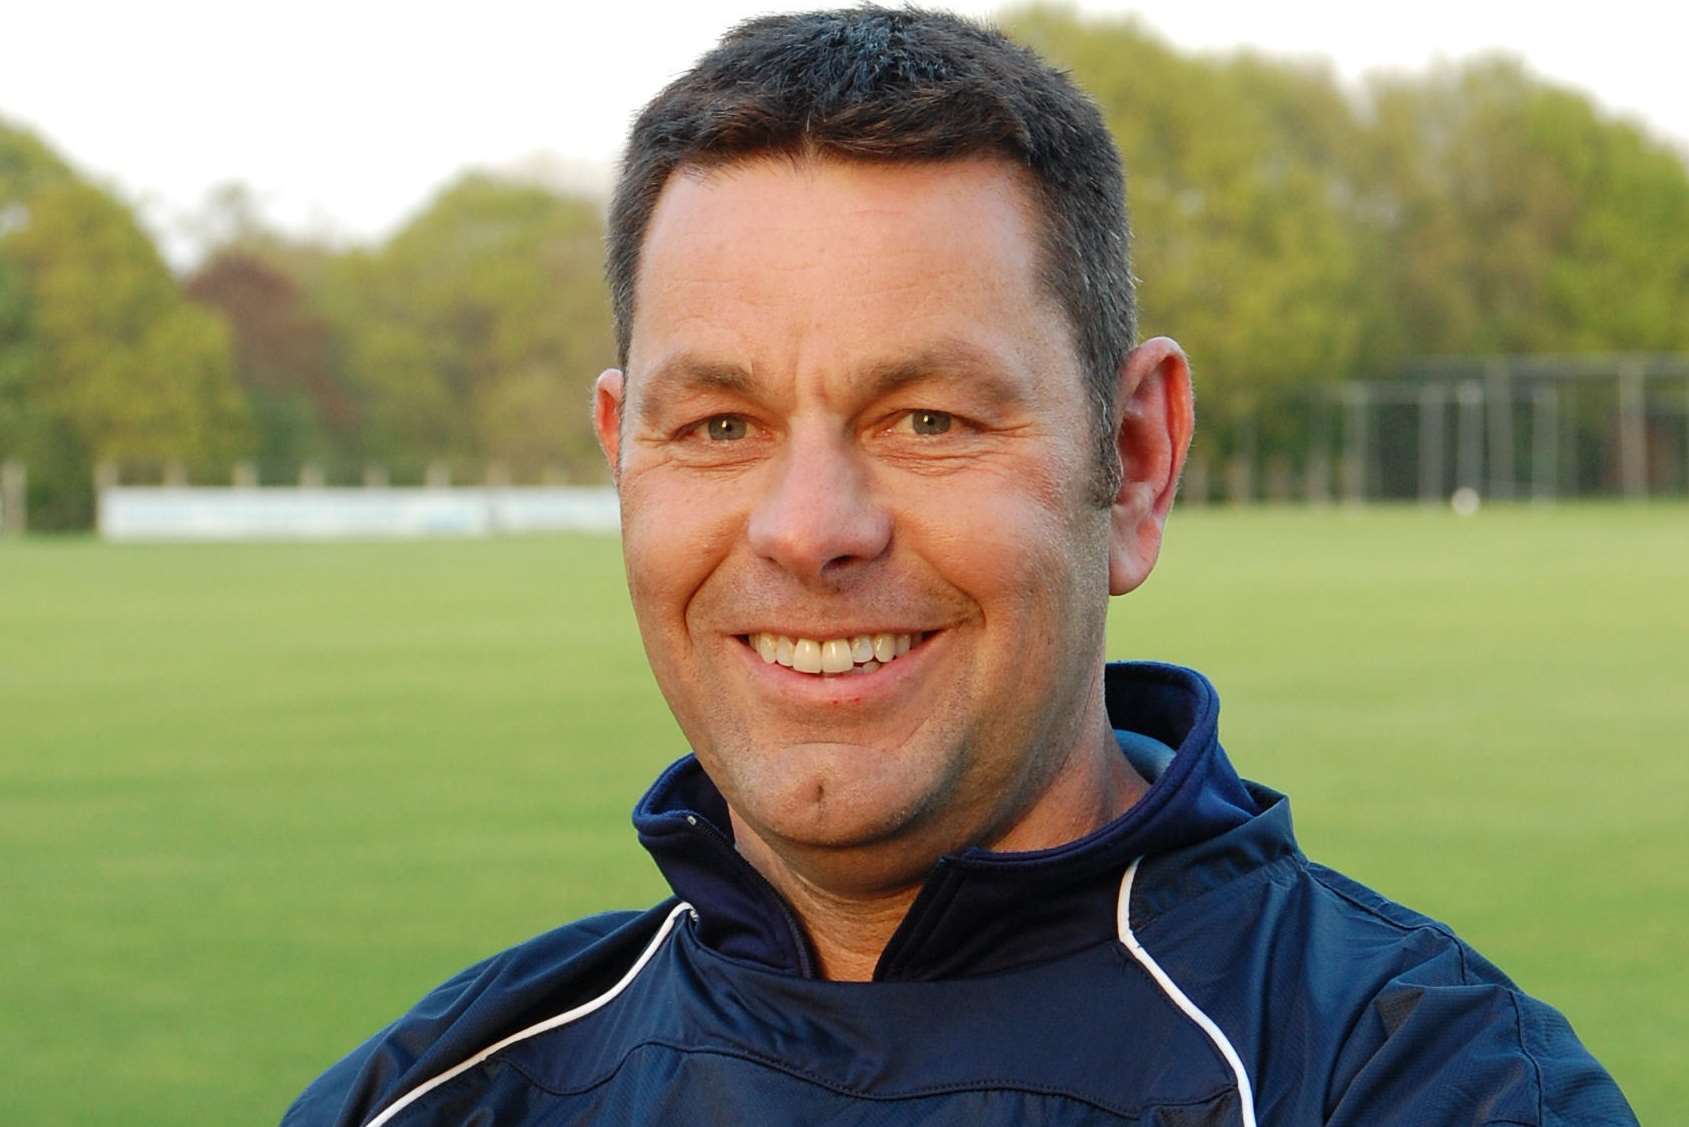 Maidstone coach Paul Hathaway